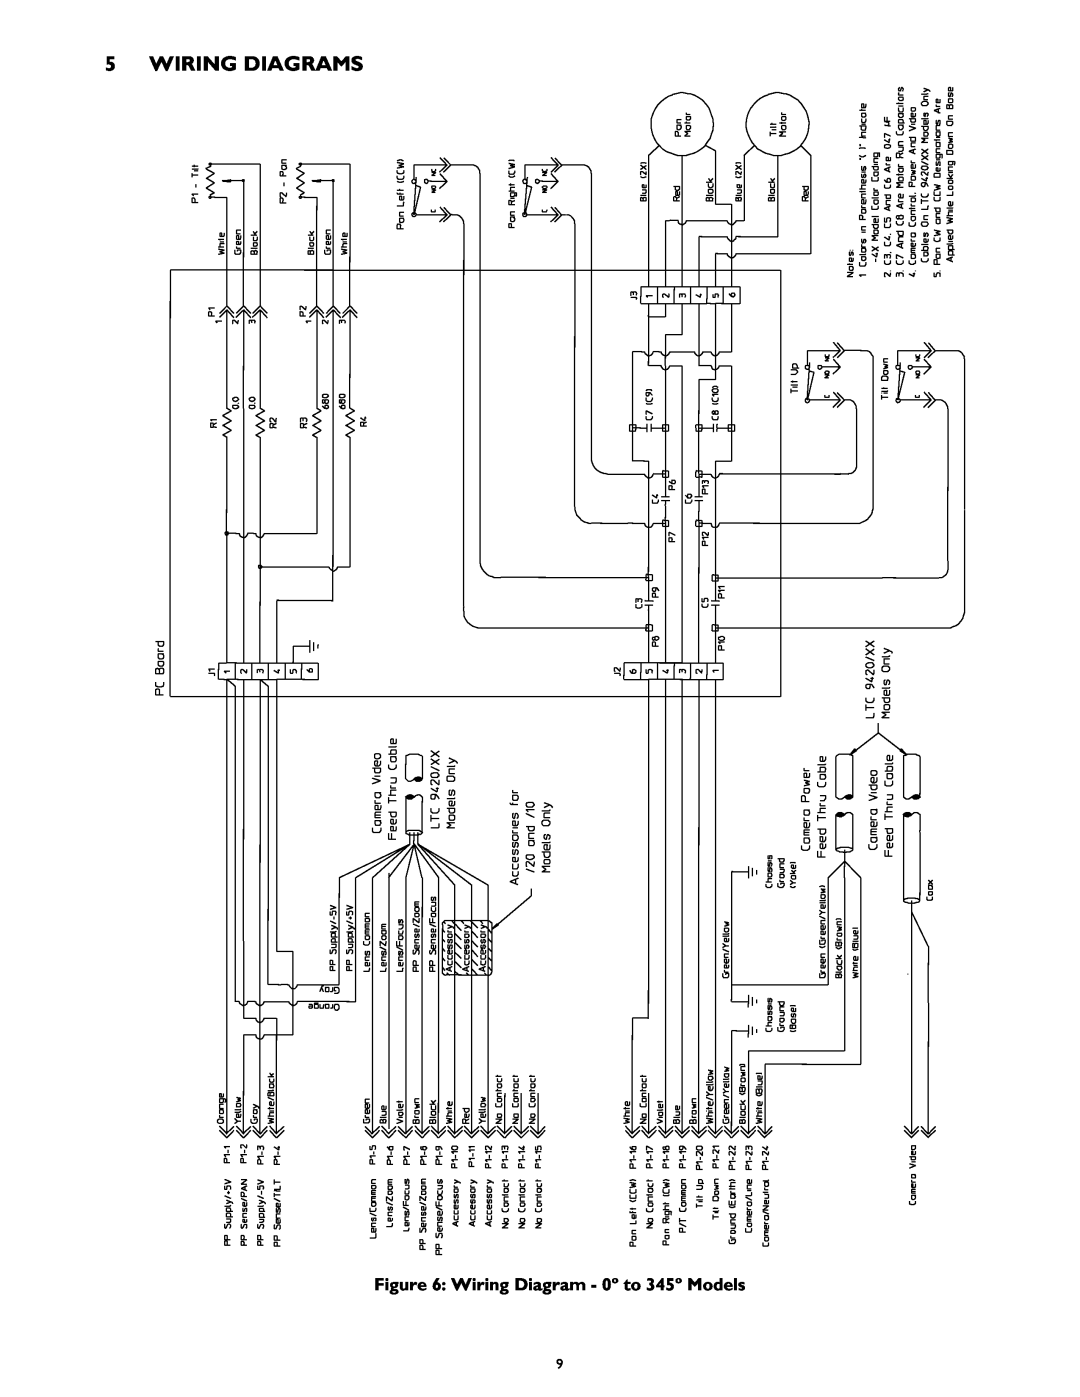 Bosch Appliances LTC 9440, LTC 9420, LTC 9418, LTC 9441 instruction manual Wiring Diagrams, Wiring Diagram - 0º to 345º Models 